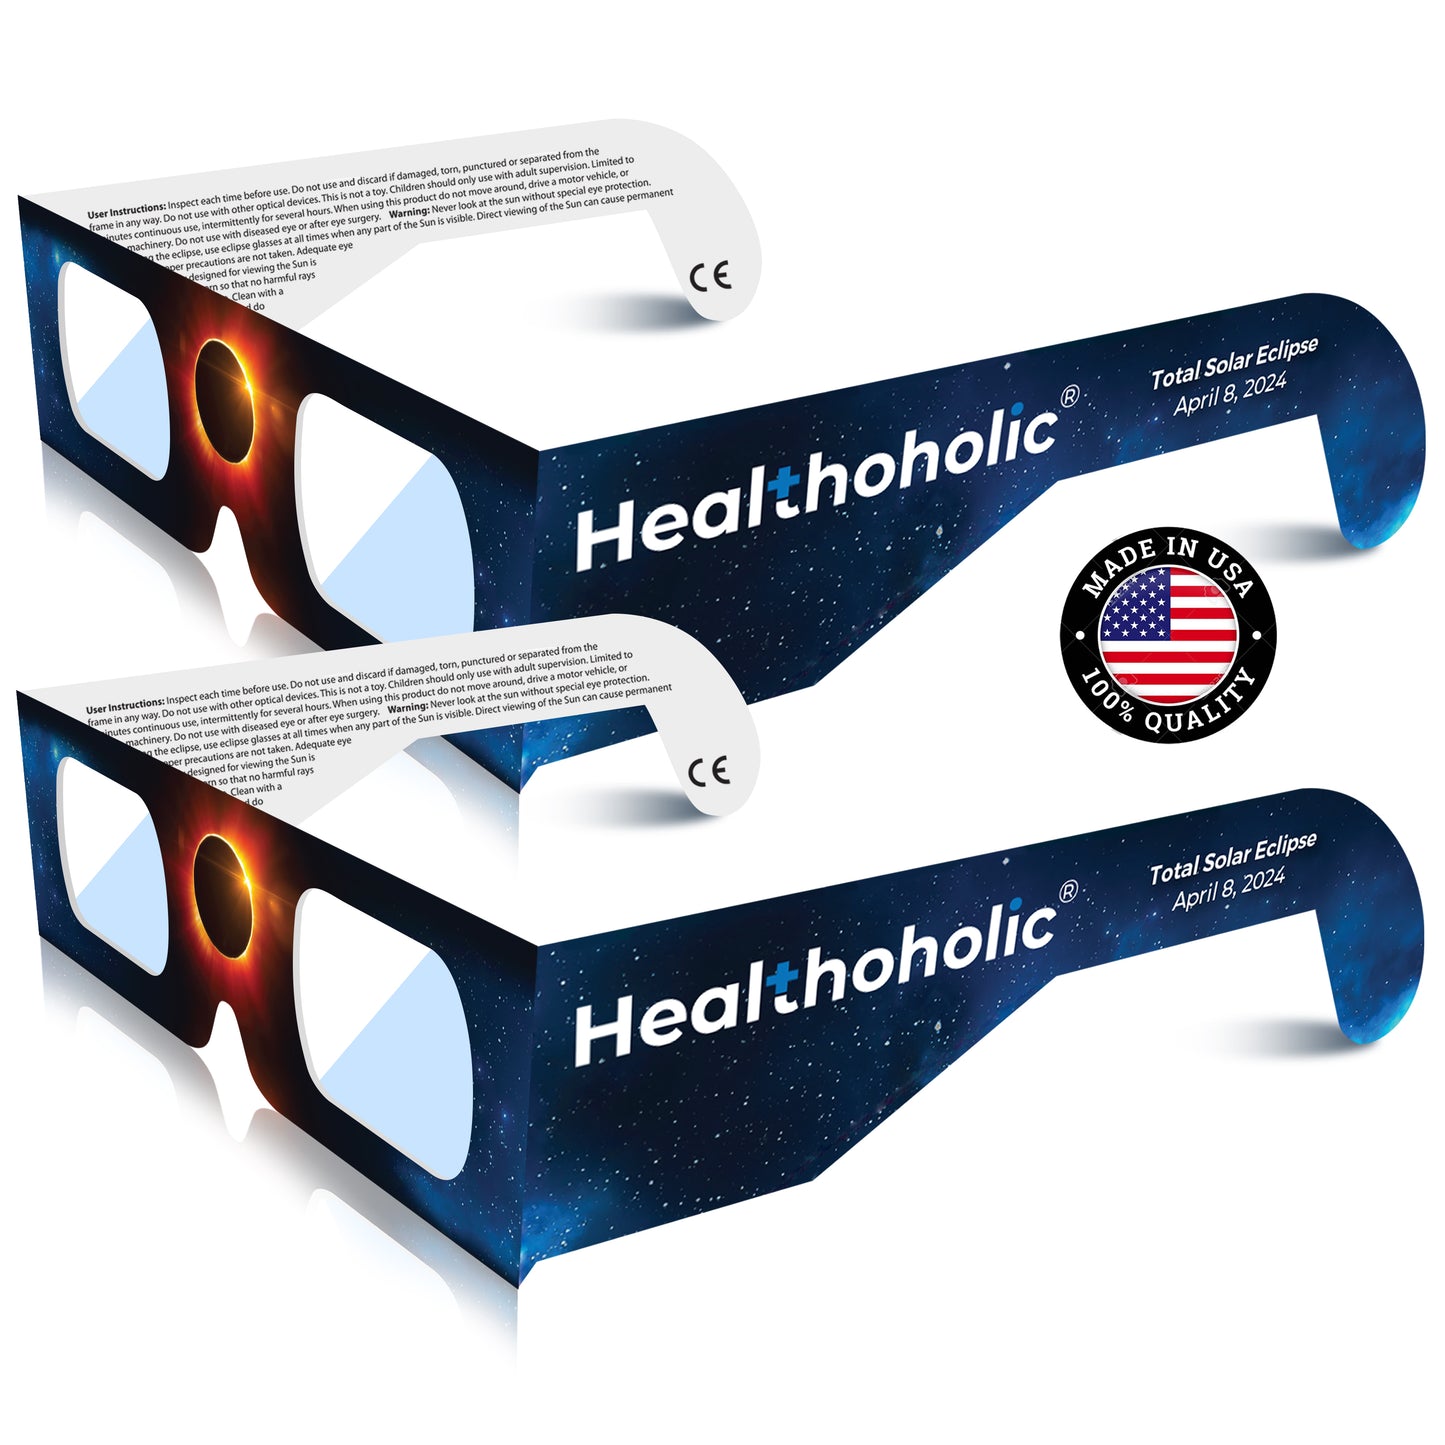 Healthoholic Eclipse Glasses